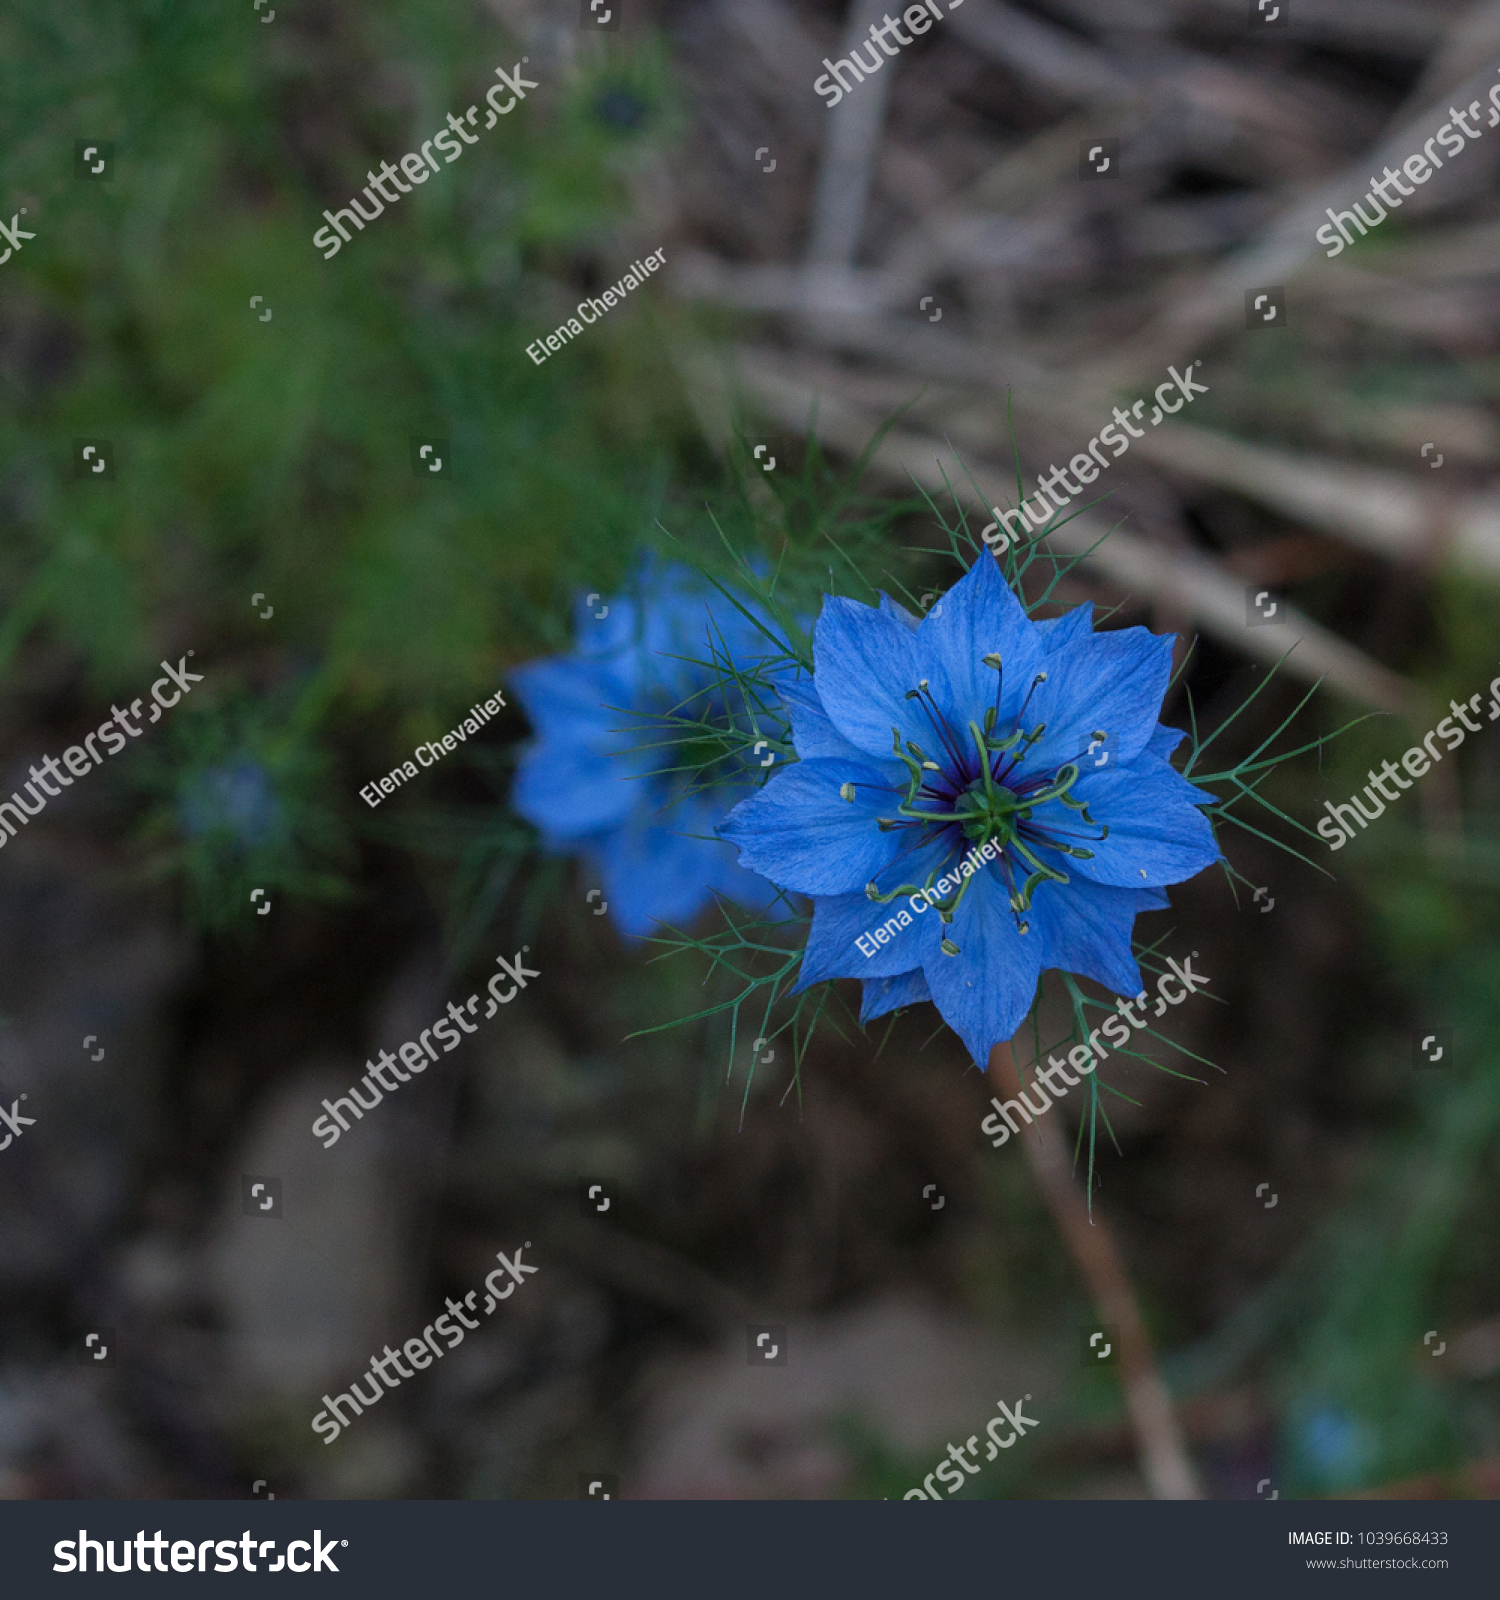 Blue Fennel Flower Nature Stock Image 1039668433